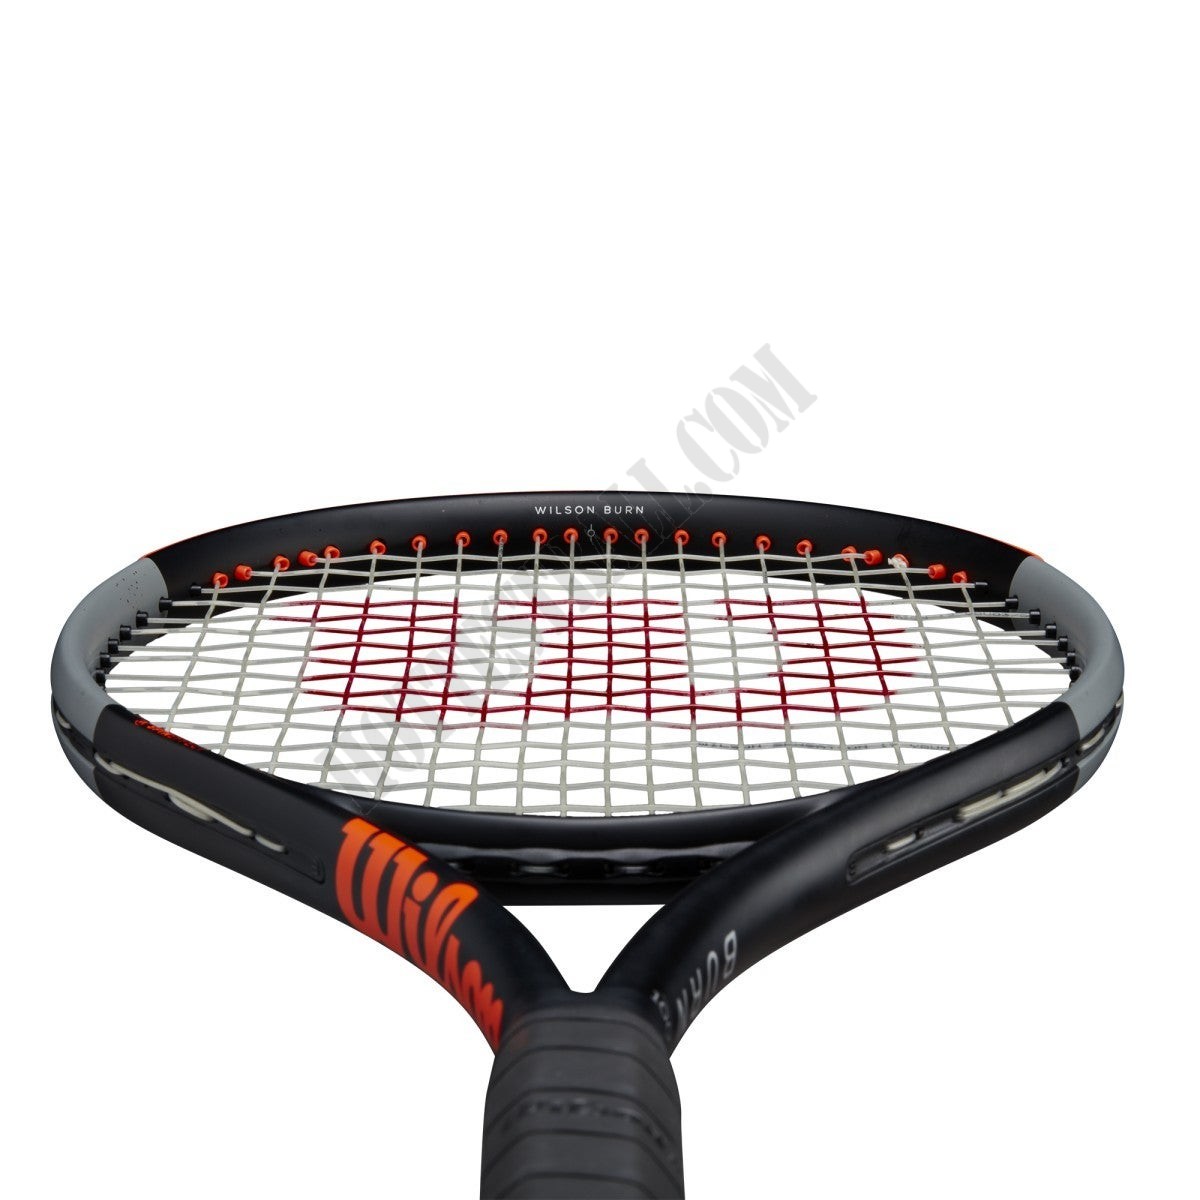 Burn 100ULS v4 Tennis Racket - Wilson Discount Store - -3